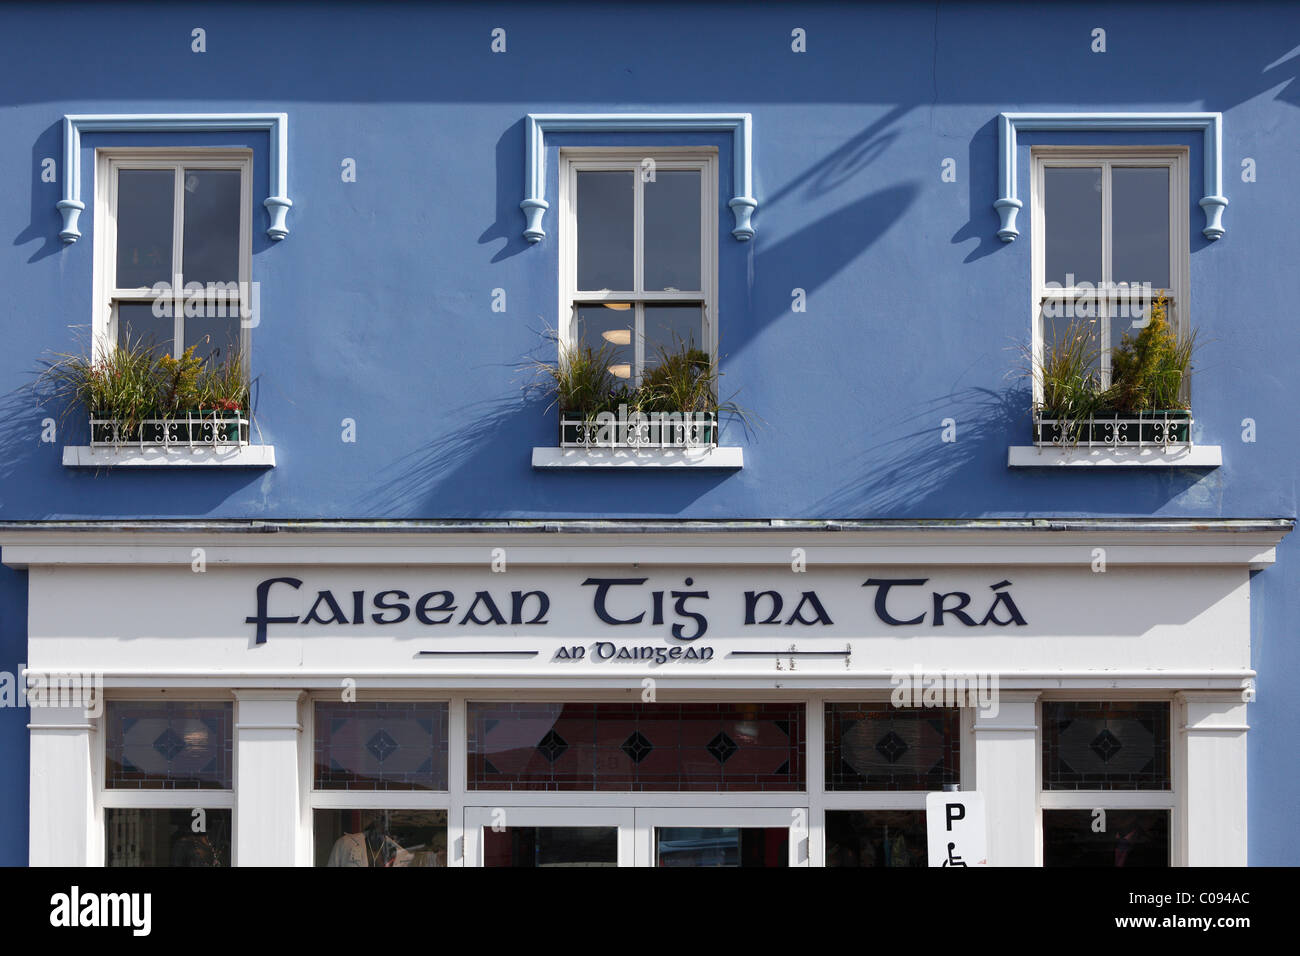 House facade with shop, Irish lettering, Dingle, County Kerry, Ireland, British Isles, Europe Stock Photo